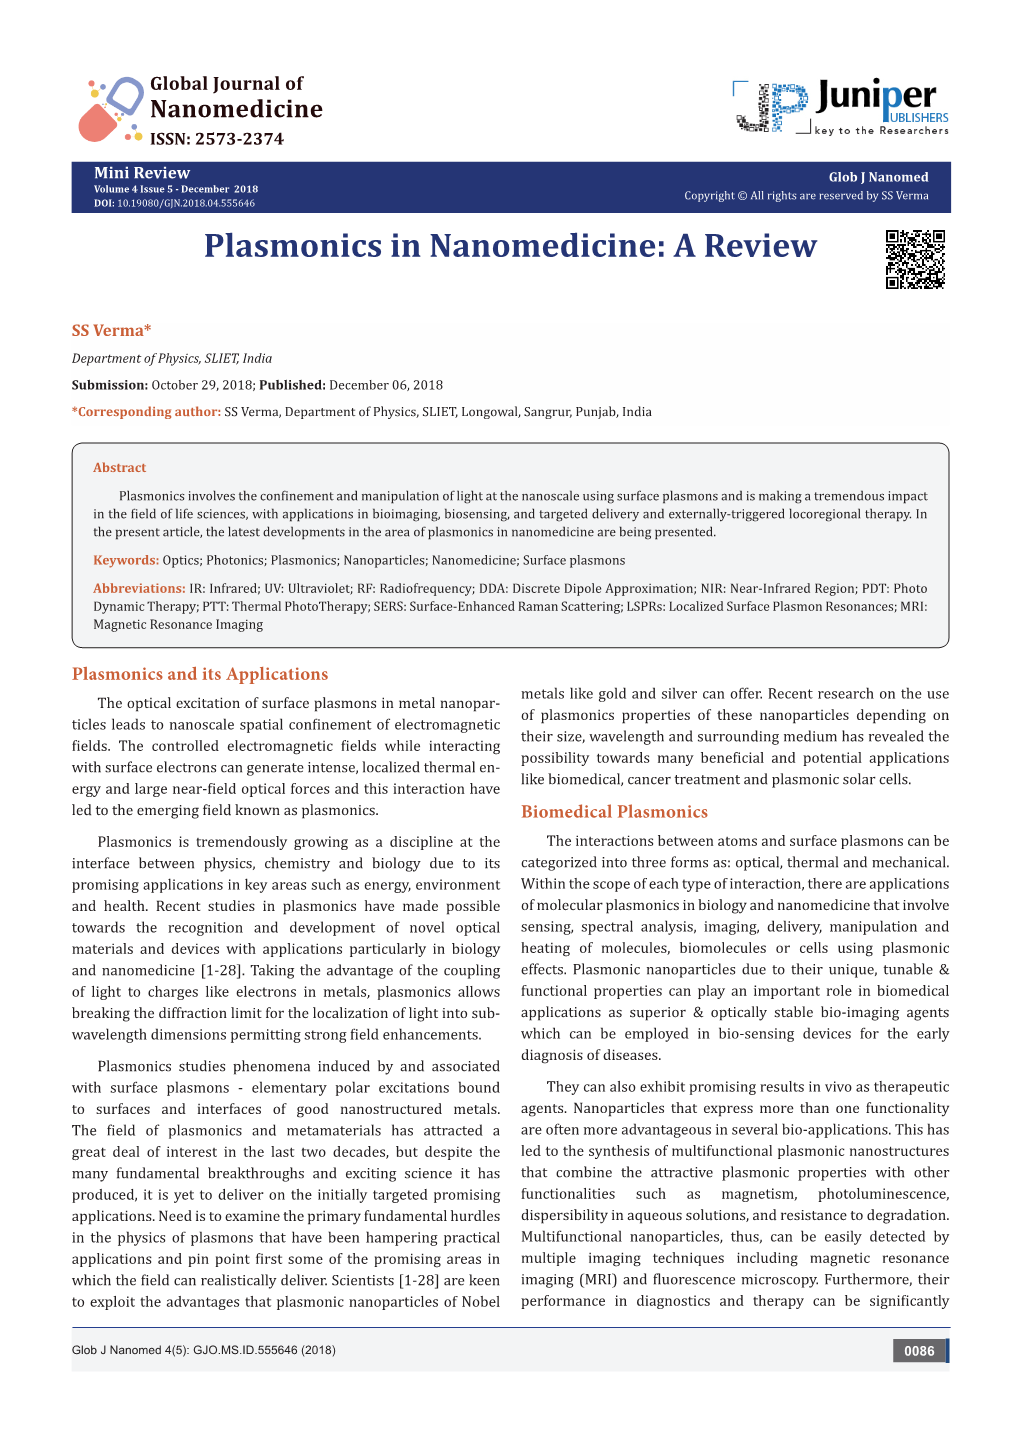 Plasmonics in Nanomedicine: a Review